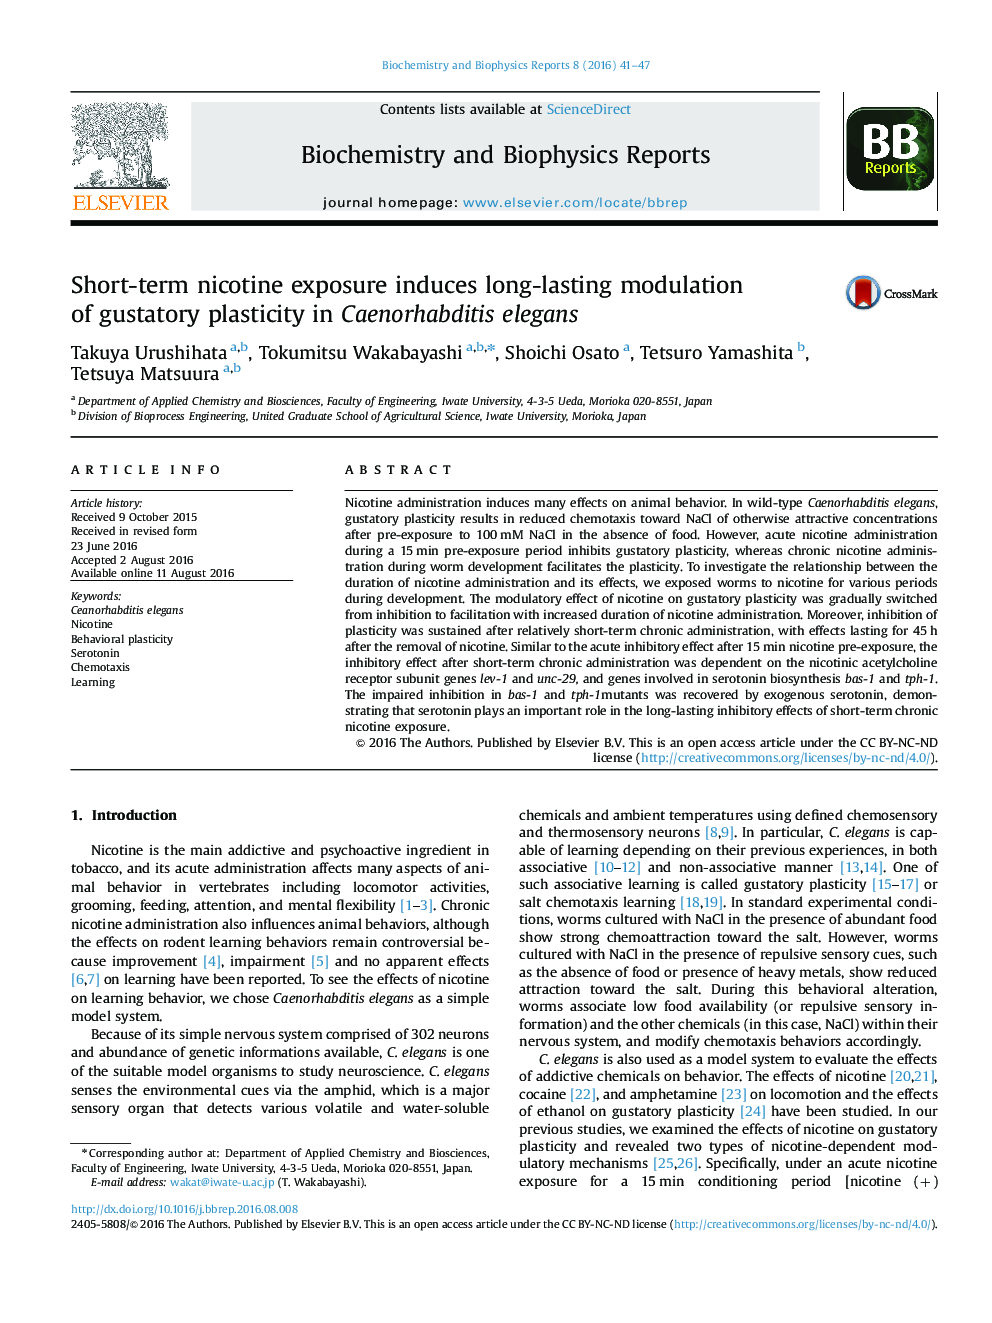 Short-term nicotine exposure induces long-lasting modulation of gustatory plasticity in Caenorhabditis elegans